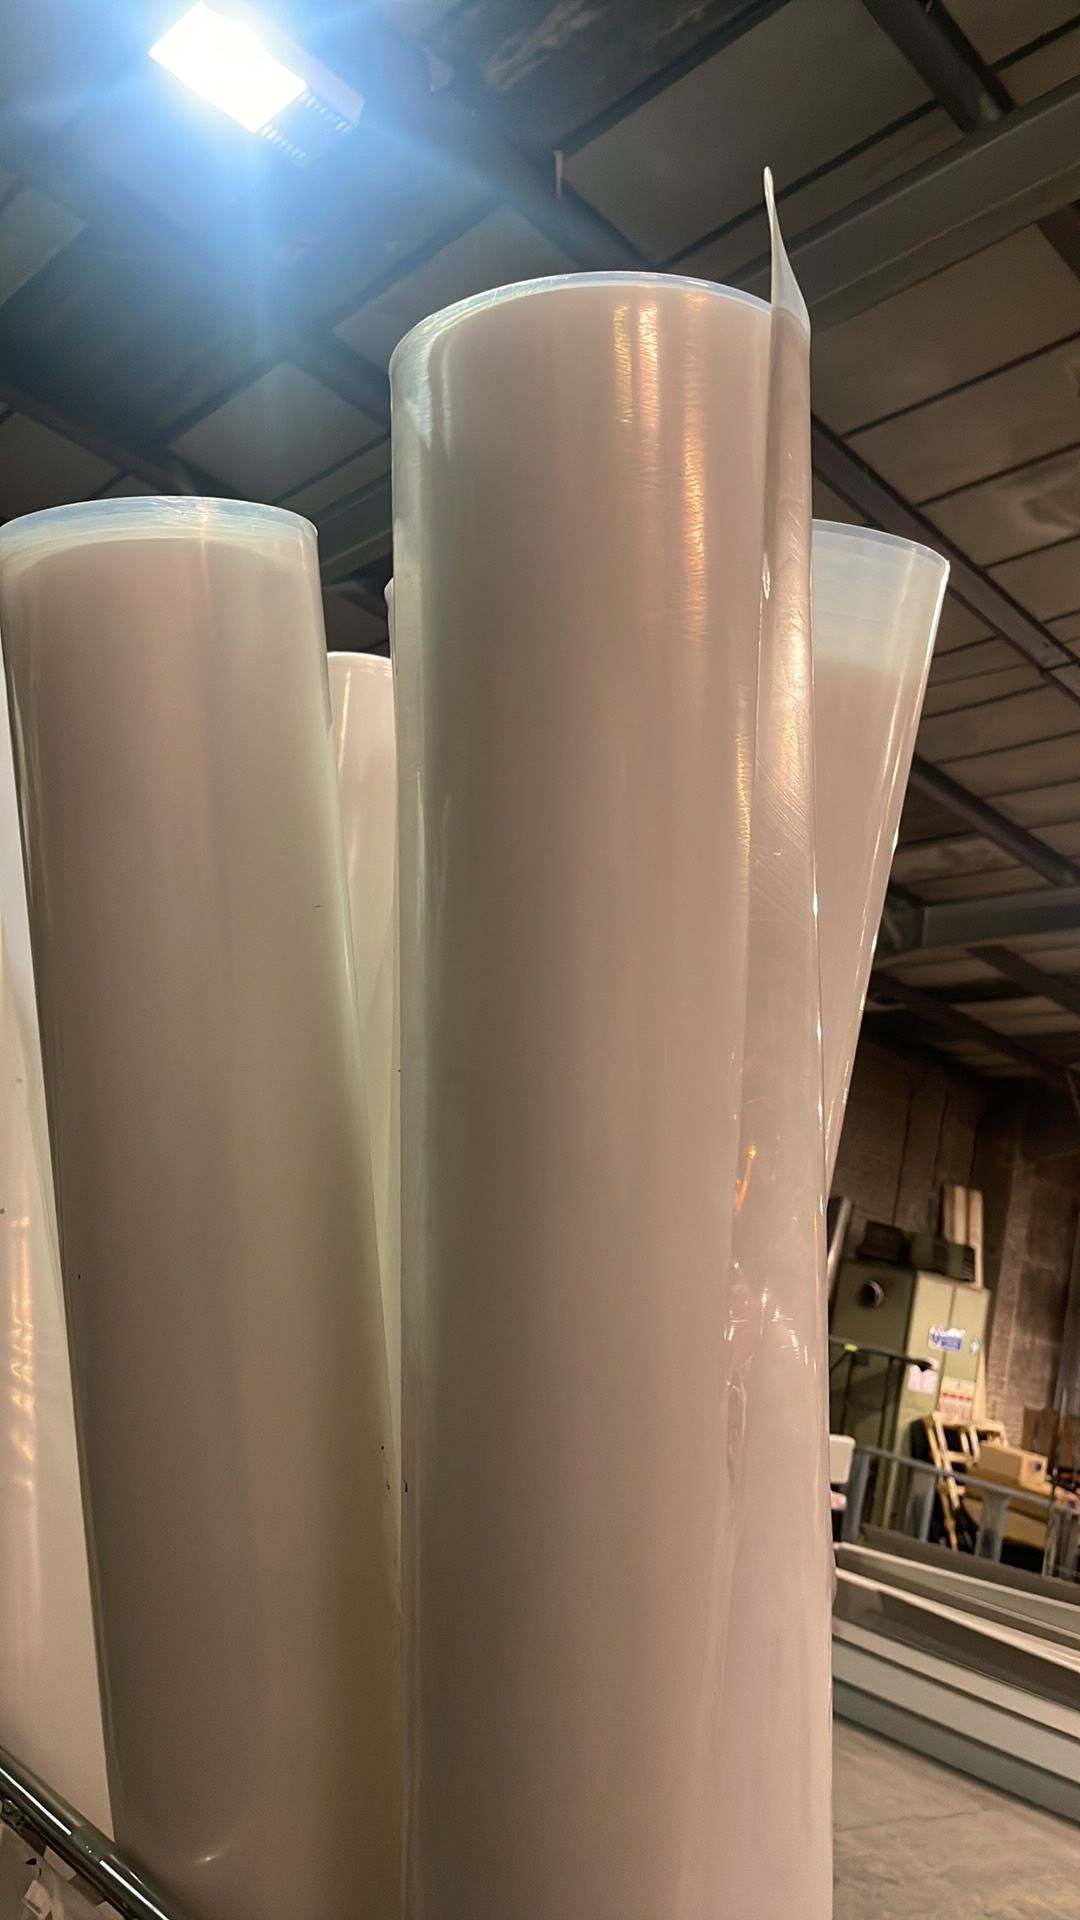 16 x 2m Rolls of Heavy Duty Plastic, Pre-Folded - Image 3 of 4